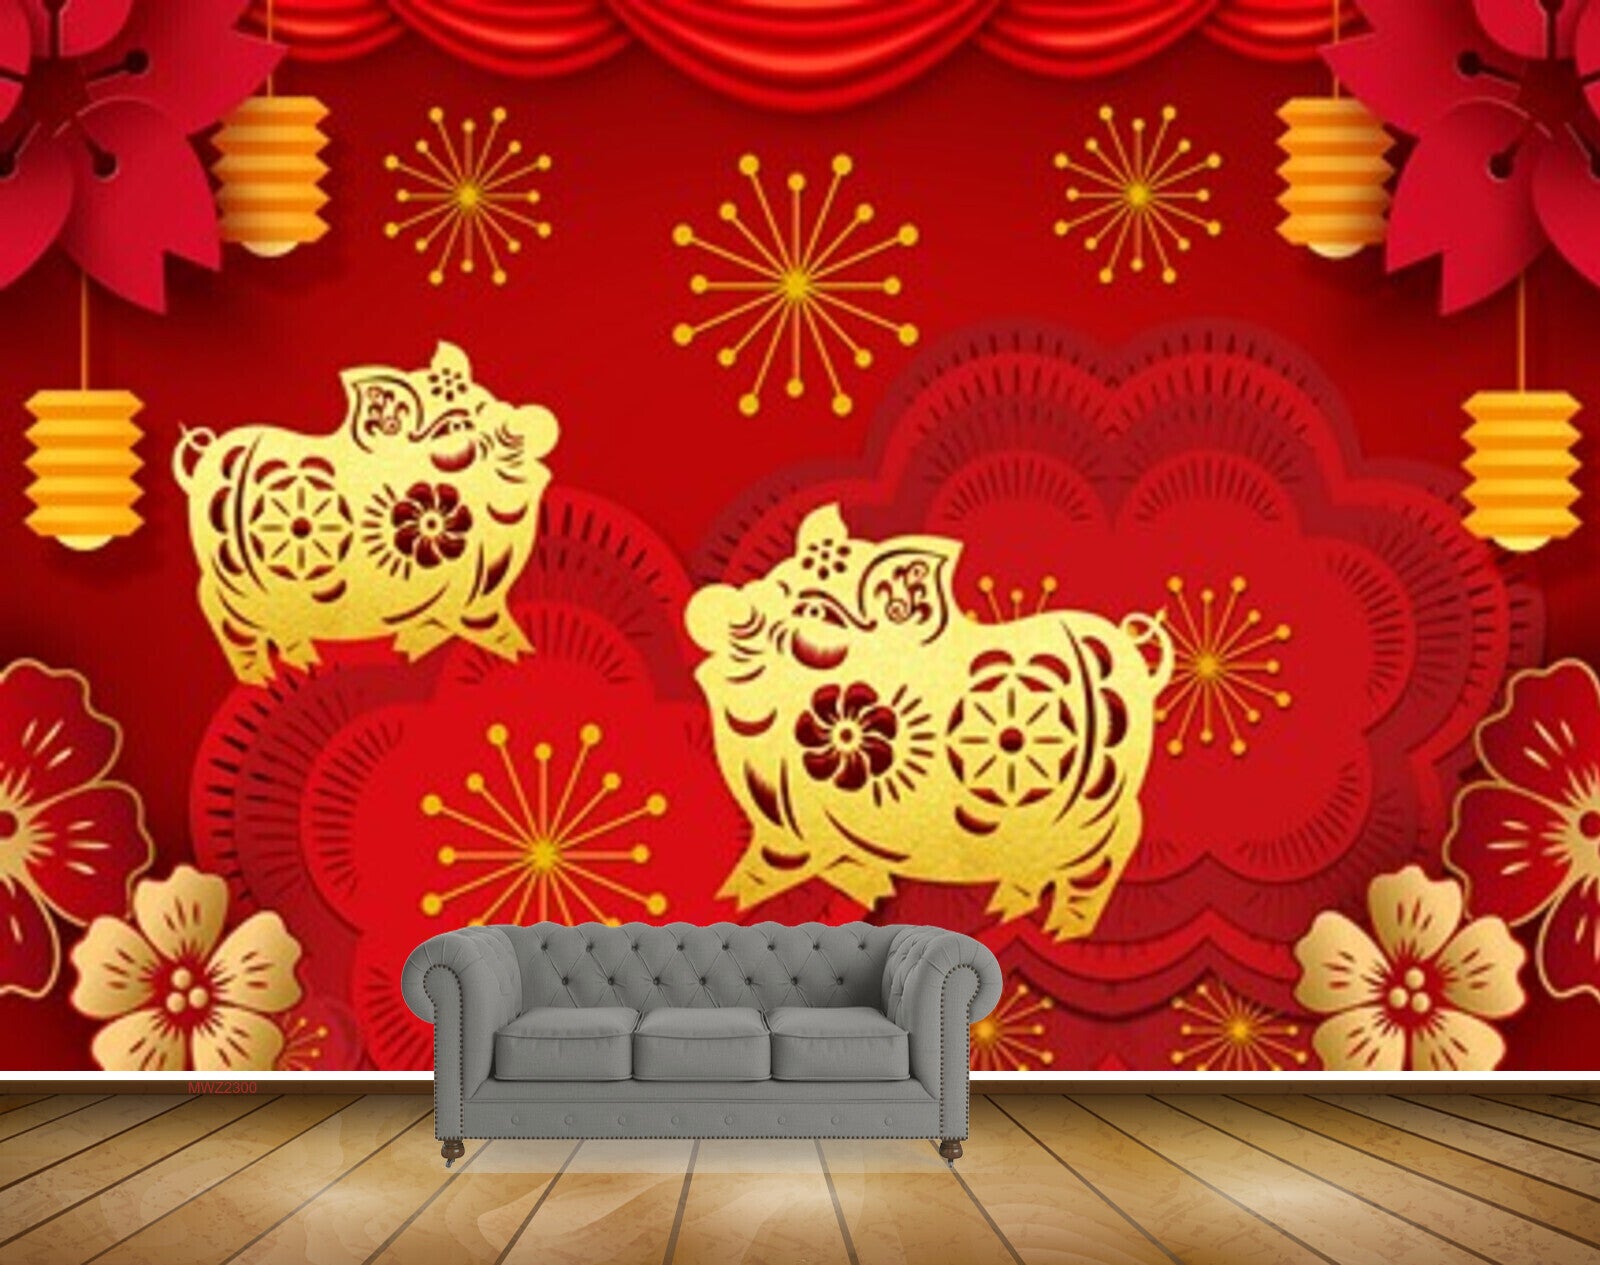 Avikalp MWZ2300 Yellow Animals Red Flowers Lamps HD Wallpaper